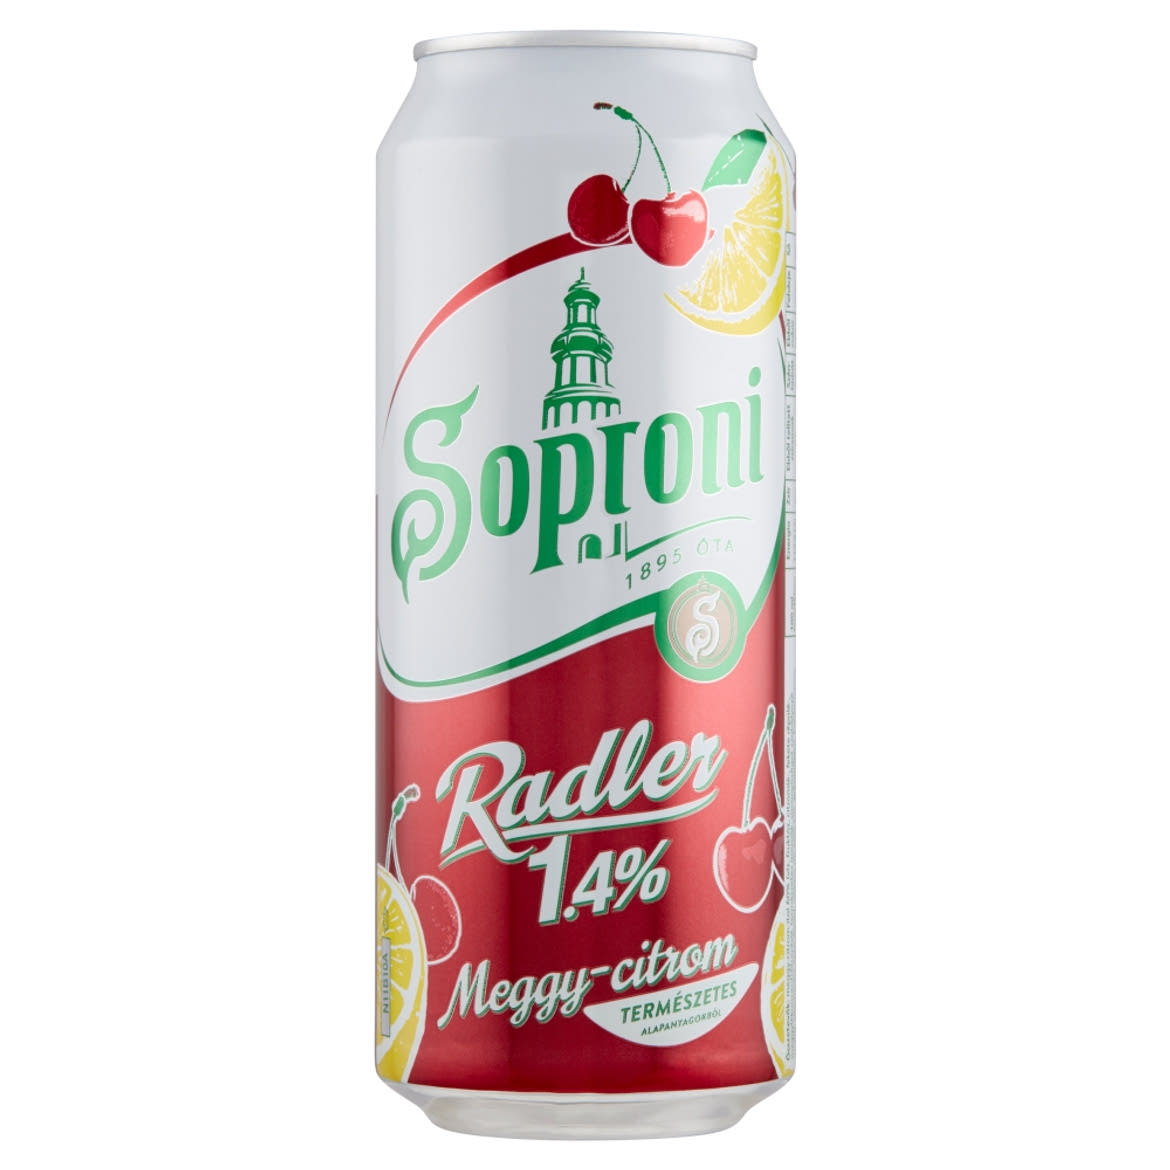 Soproni Radler meggy-citromos sörital 1,4%